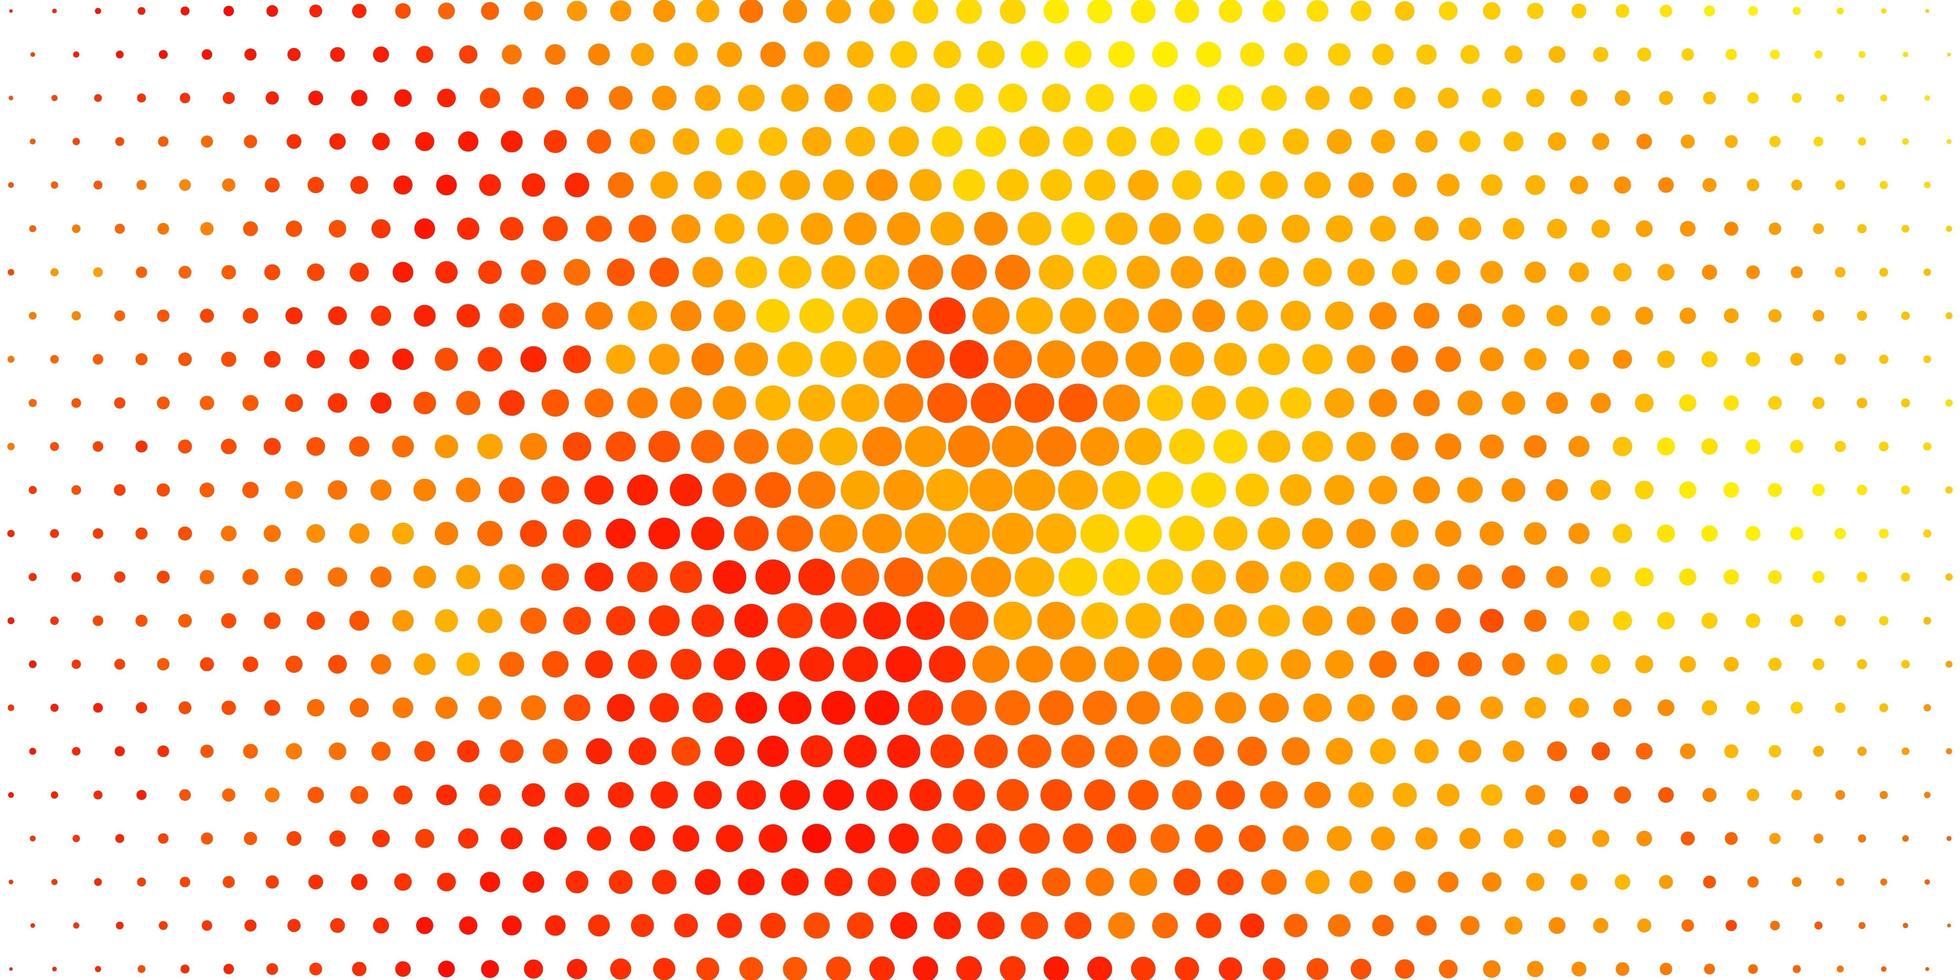 layout de vetor laranja claro com círculos.